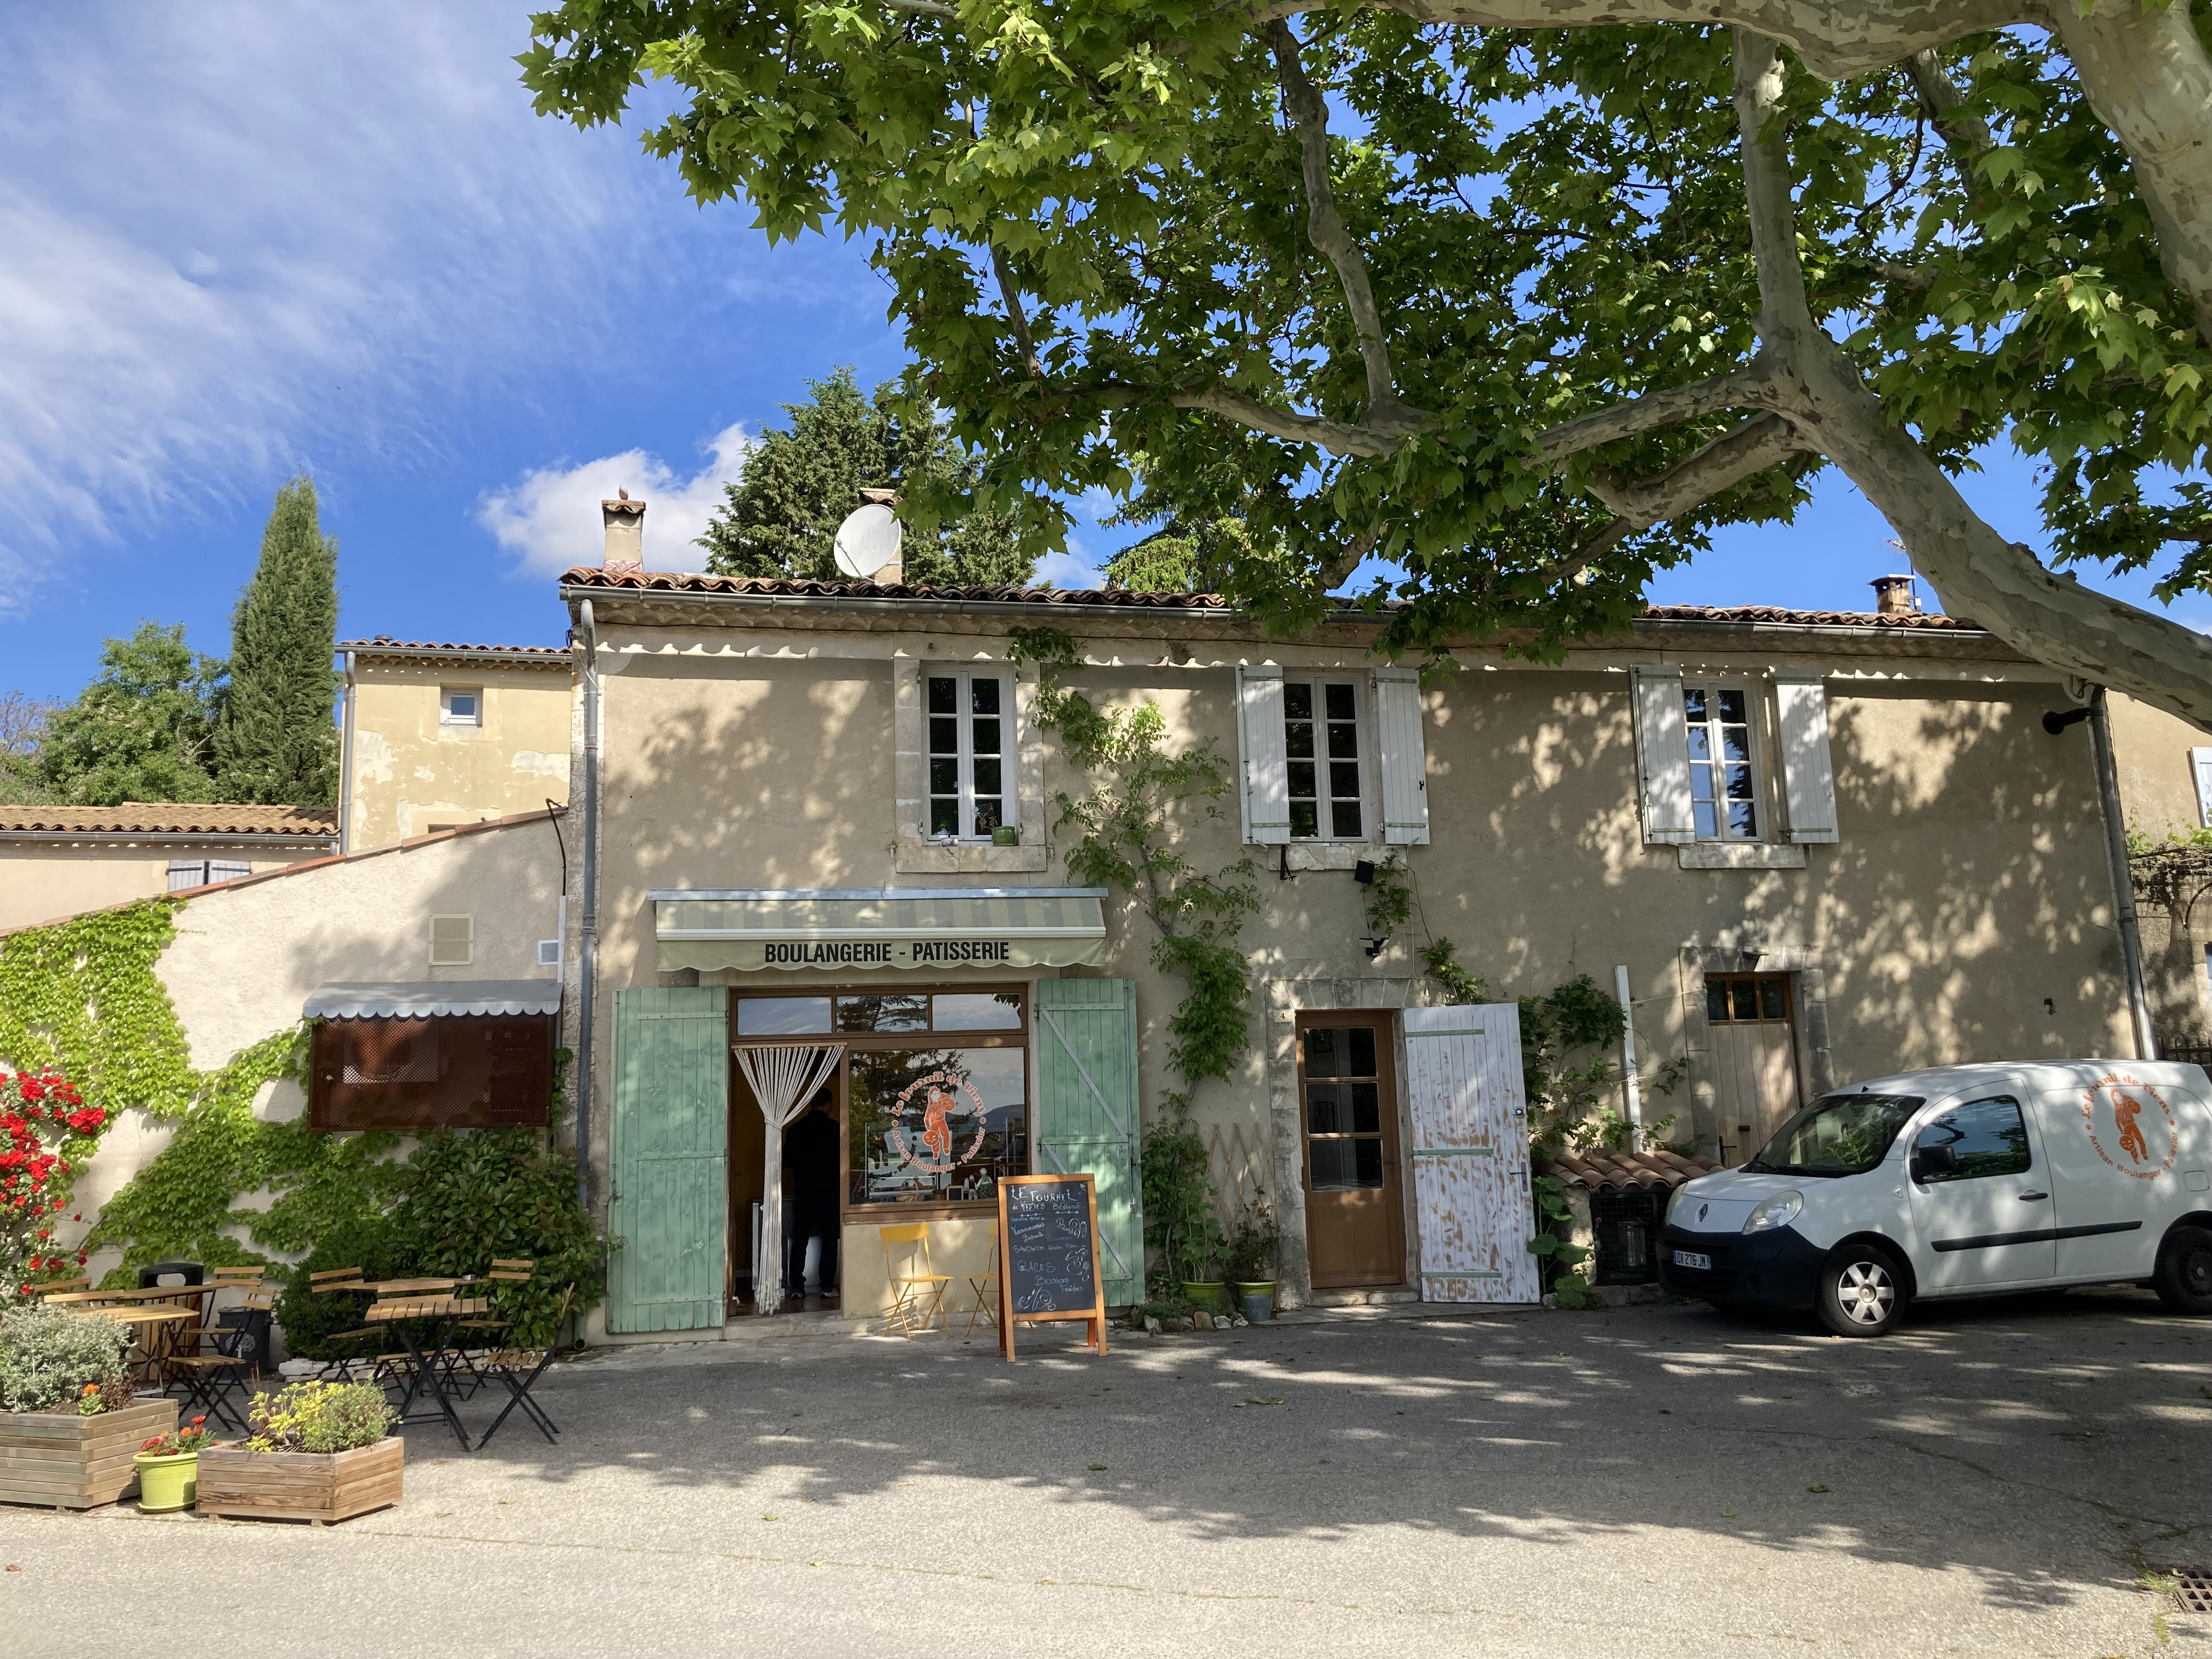 Boulangerie - Pâtisserie Village Luberon